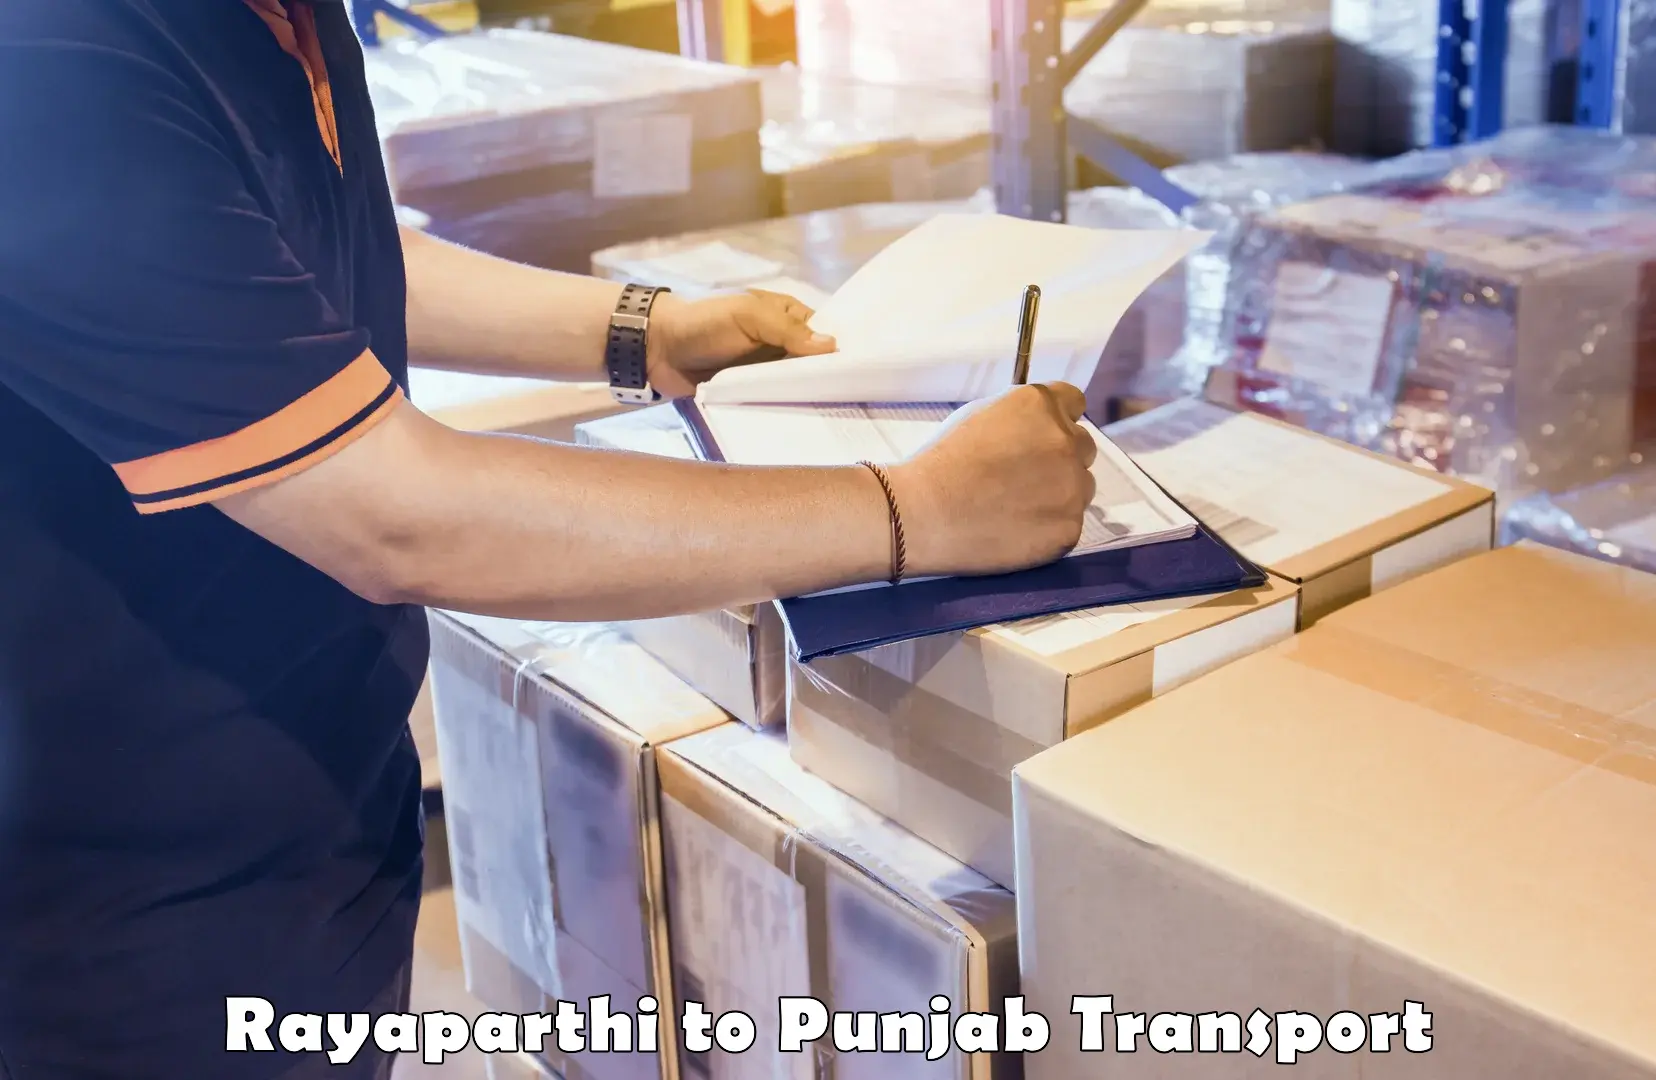 Pick up transport service Rayaparthi to Bagha Purana